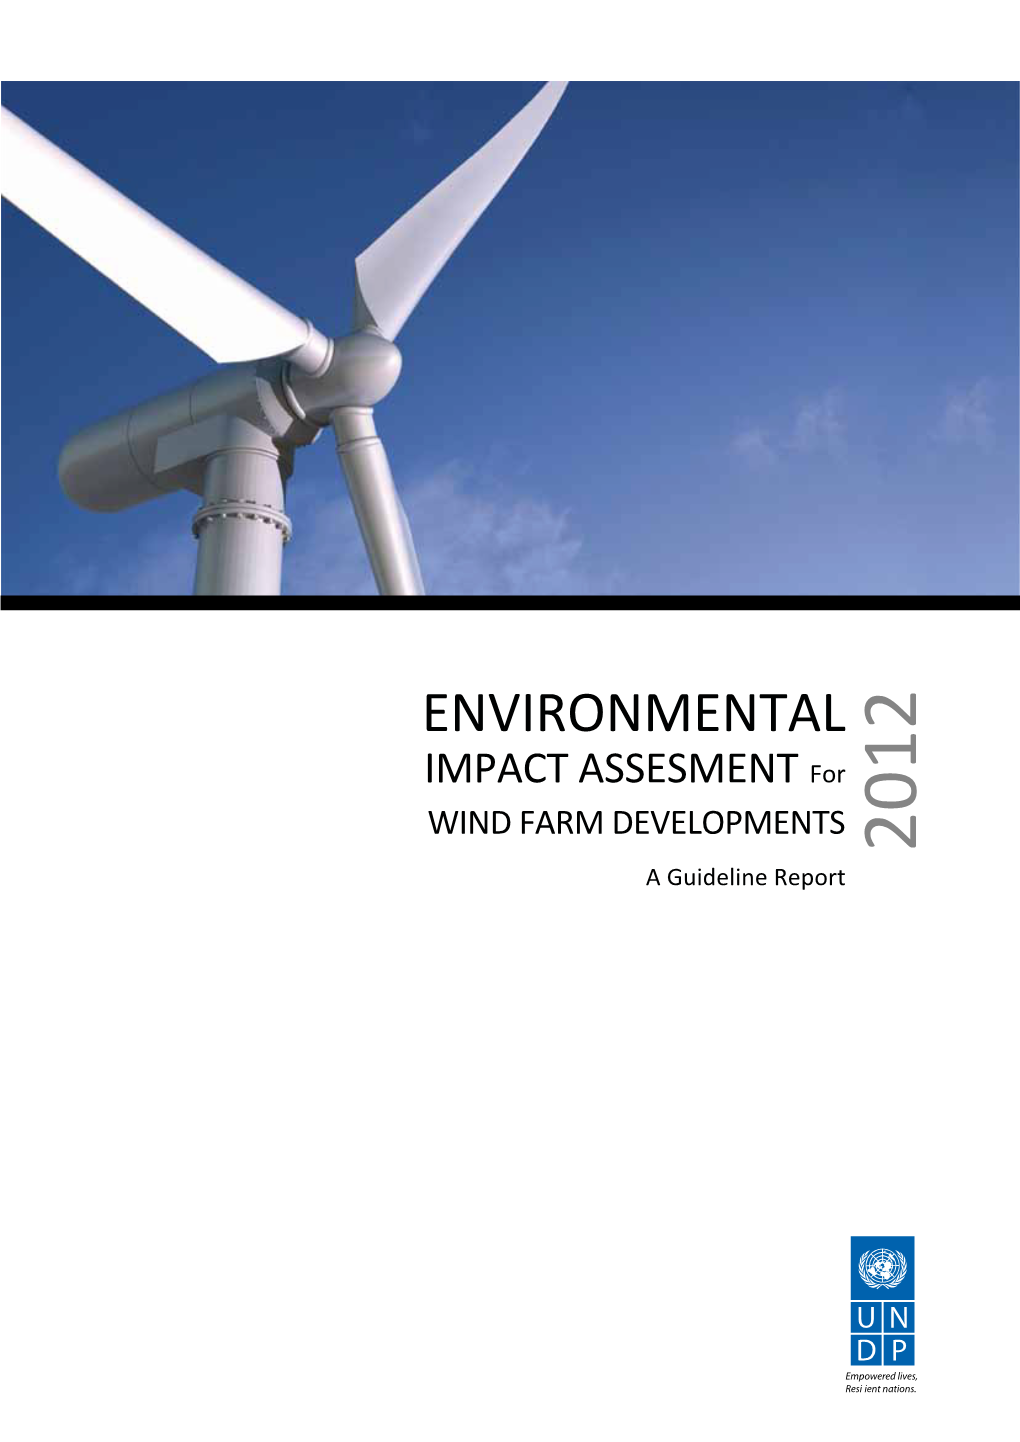 Environment Impact Assessment for Wind Farm Developents